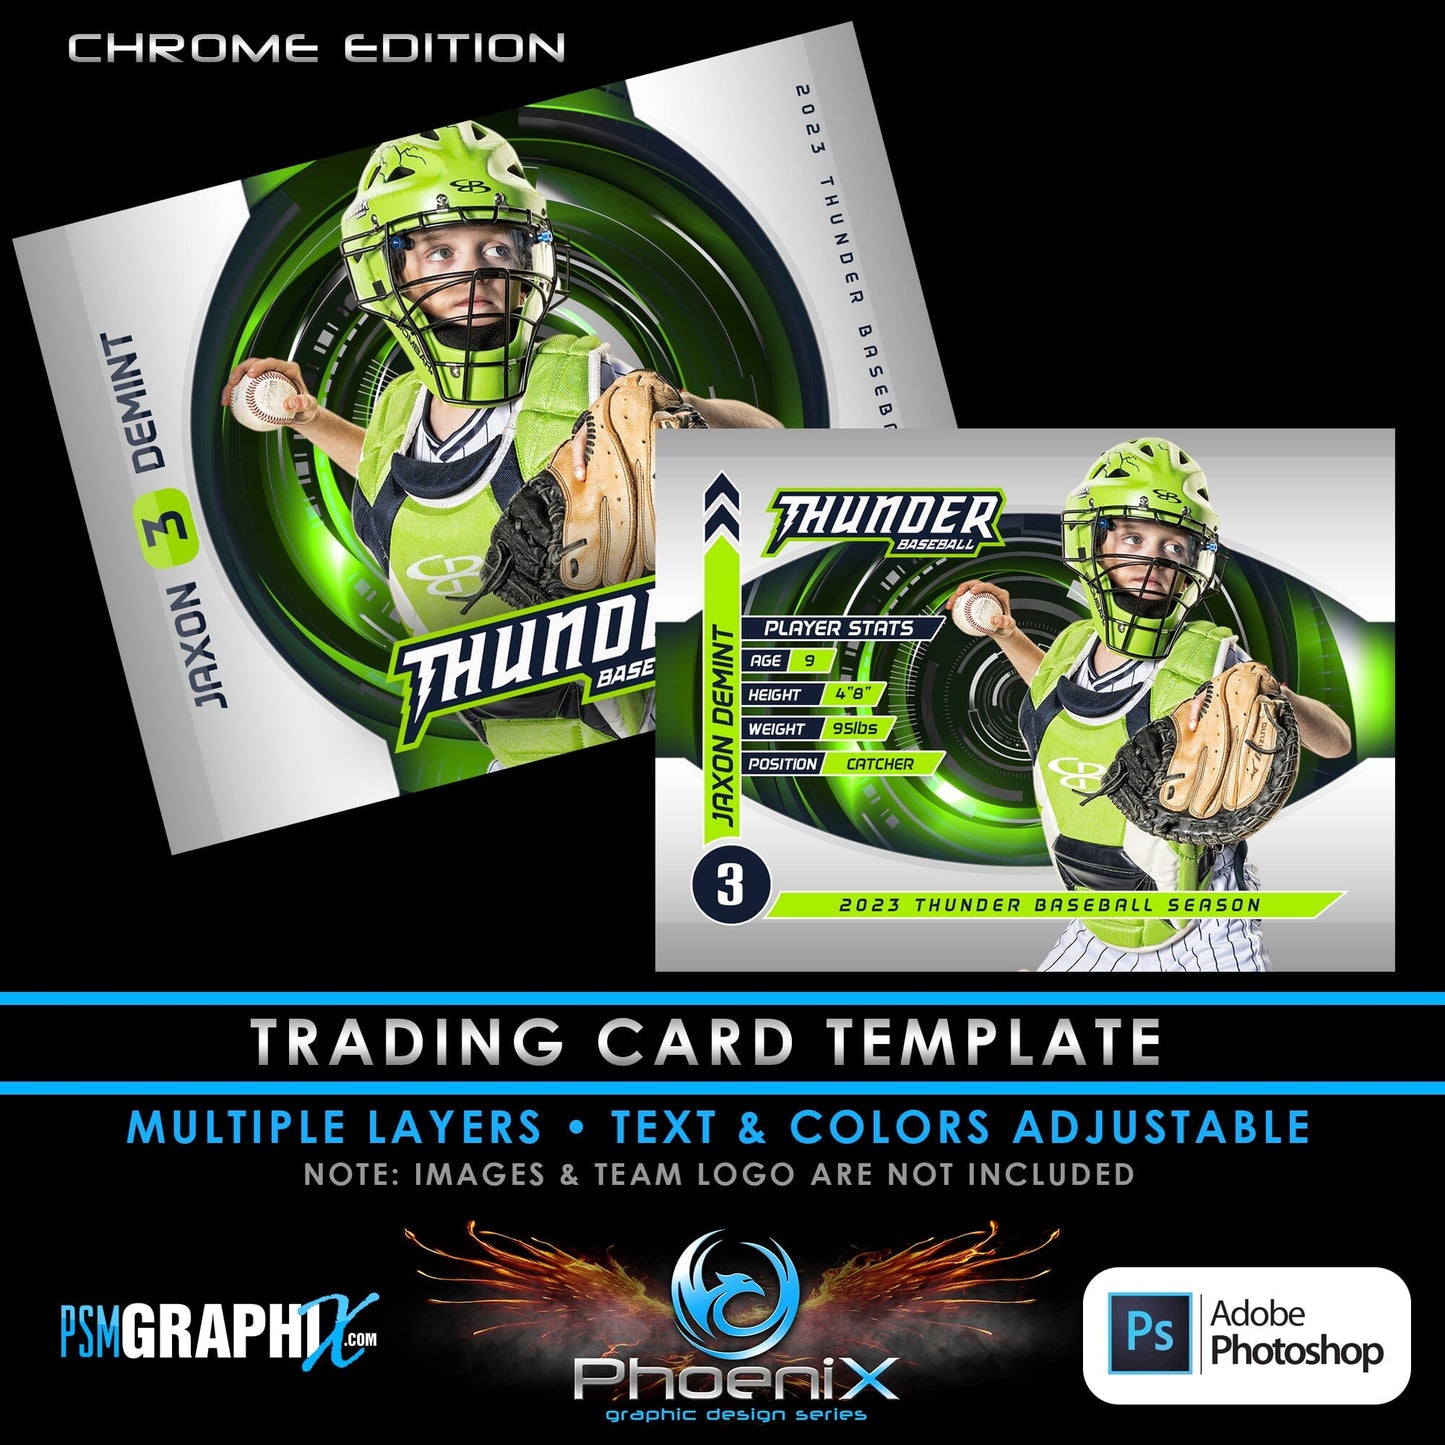 CHROME - Phoenix Series - Trading Card Template-Photoshop Template - PSMGraphix